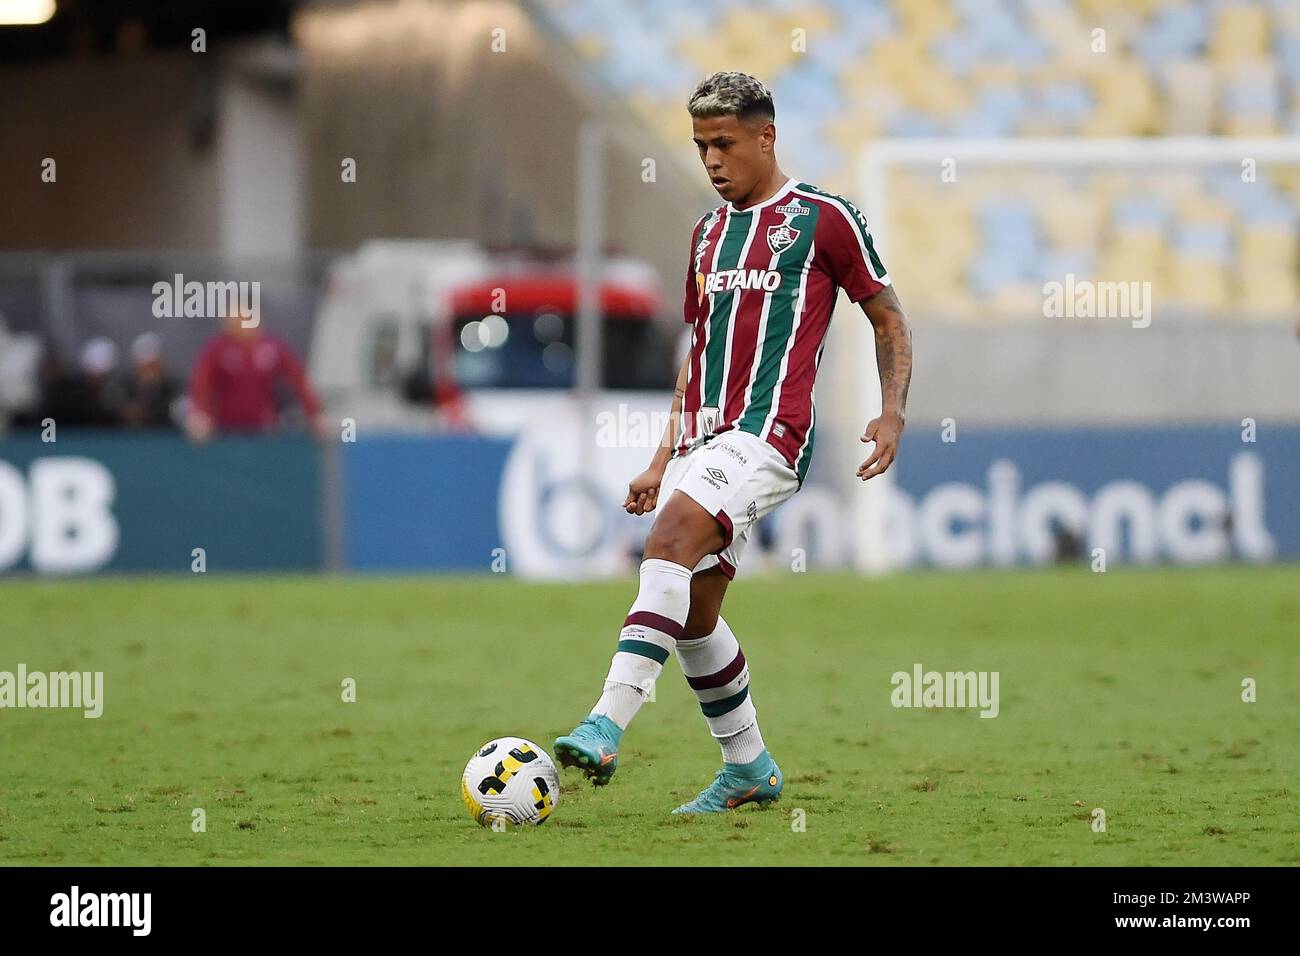 Rio de Janeiro, Brazil,November 5, 2022. Football player Matheus Martins of fluminense team, during the fluminense vs. São Paulo game for the Brazilia Stock Photo